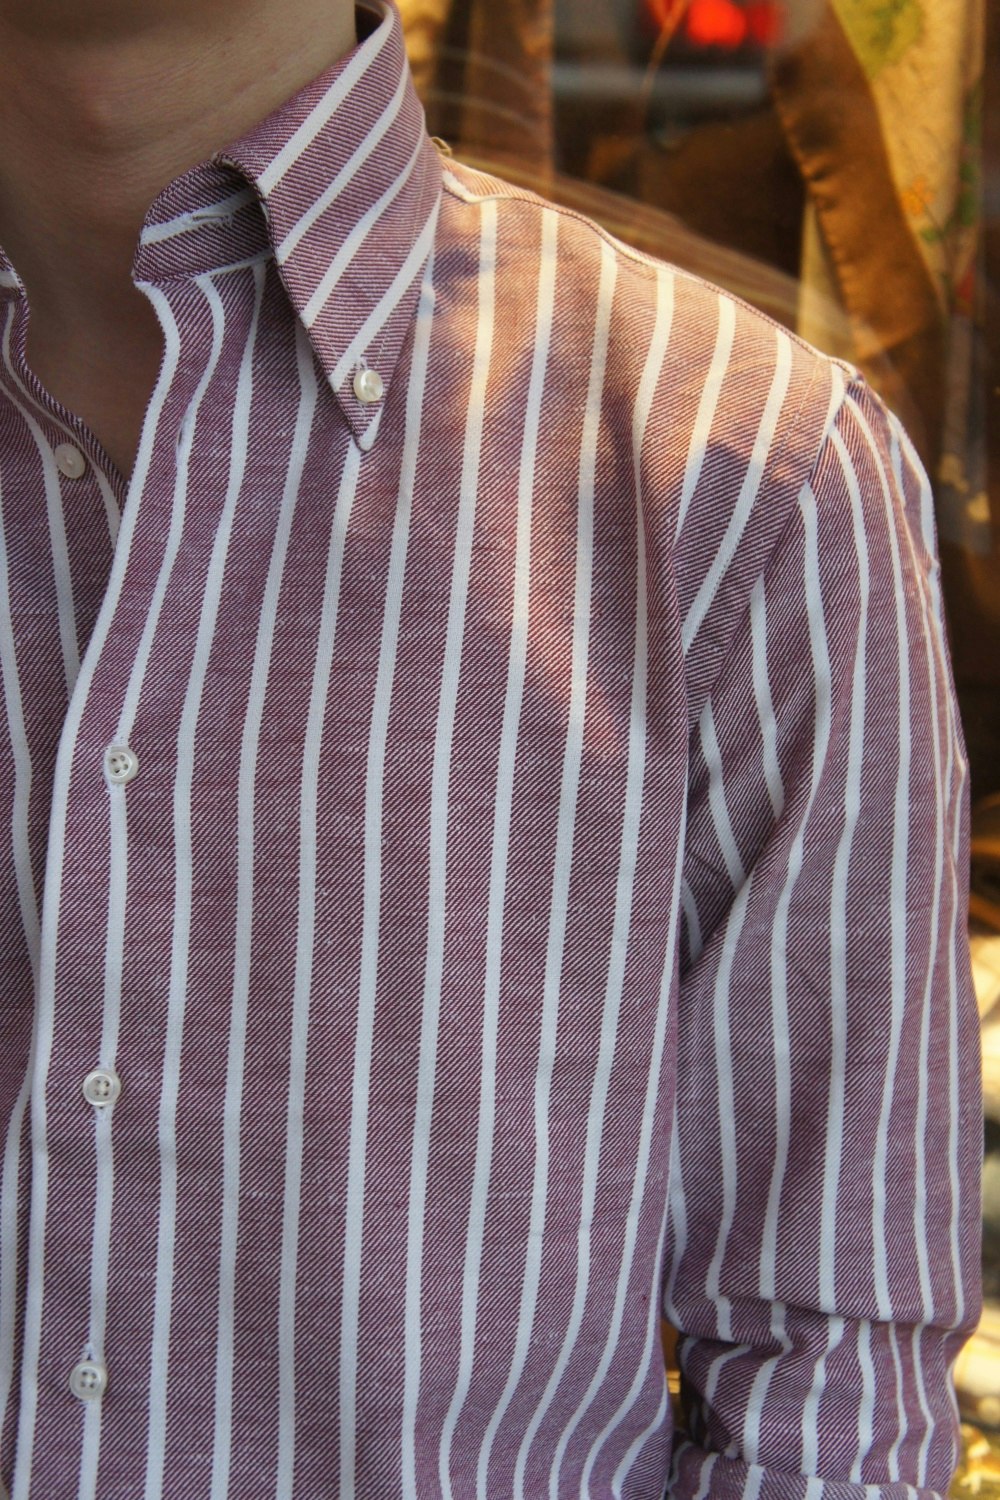 Striped Twill Shirt - Button Down - Burgundy/White